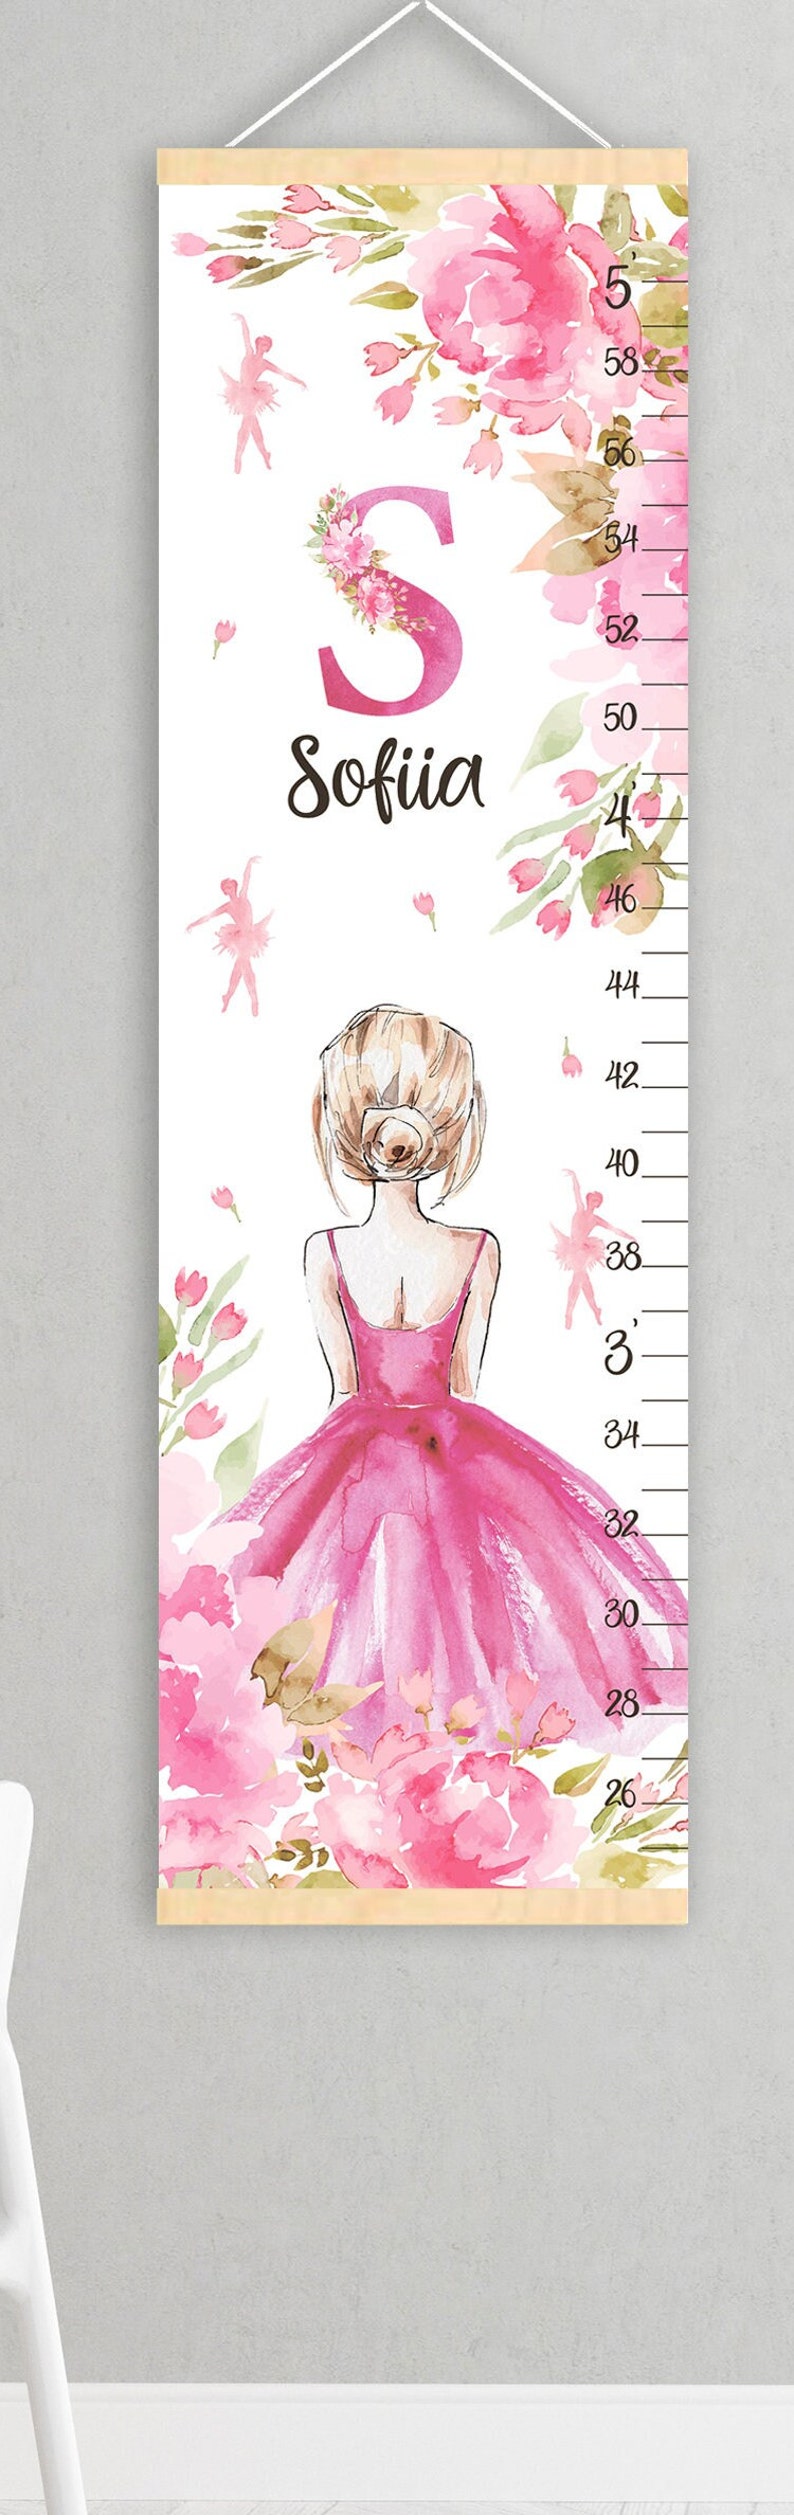 Ballet growth chart Ballerina height chart Dancer and flowers nursery decor Shower or birthday gift image 2